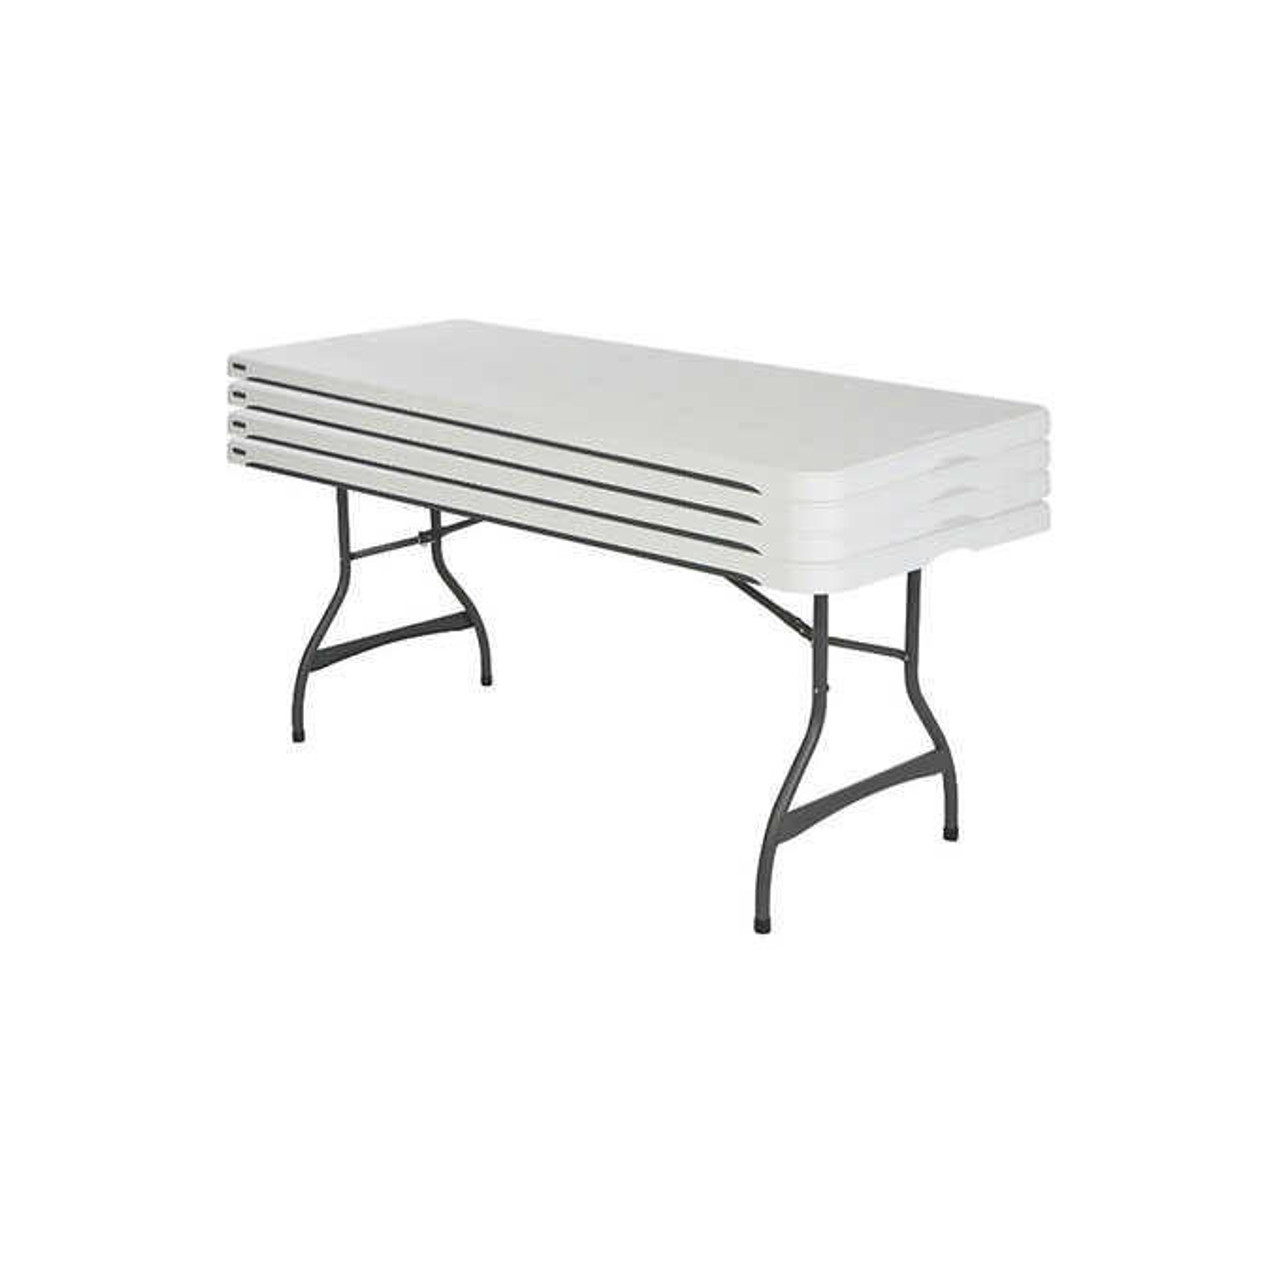 LIFETIME Lifetime 182.9 cm (6 ft.) Commercial Folding Tables, 4-Pack - White and Black 